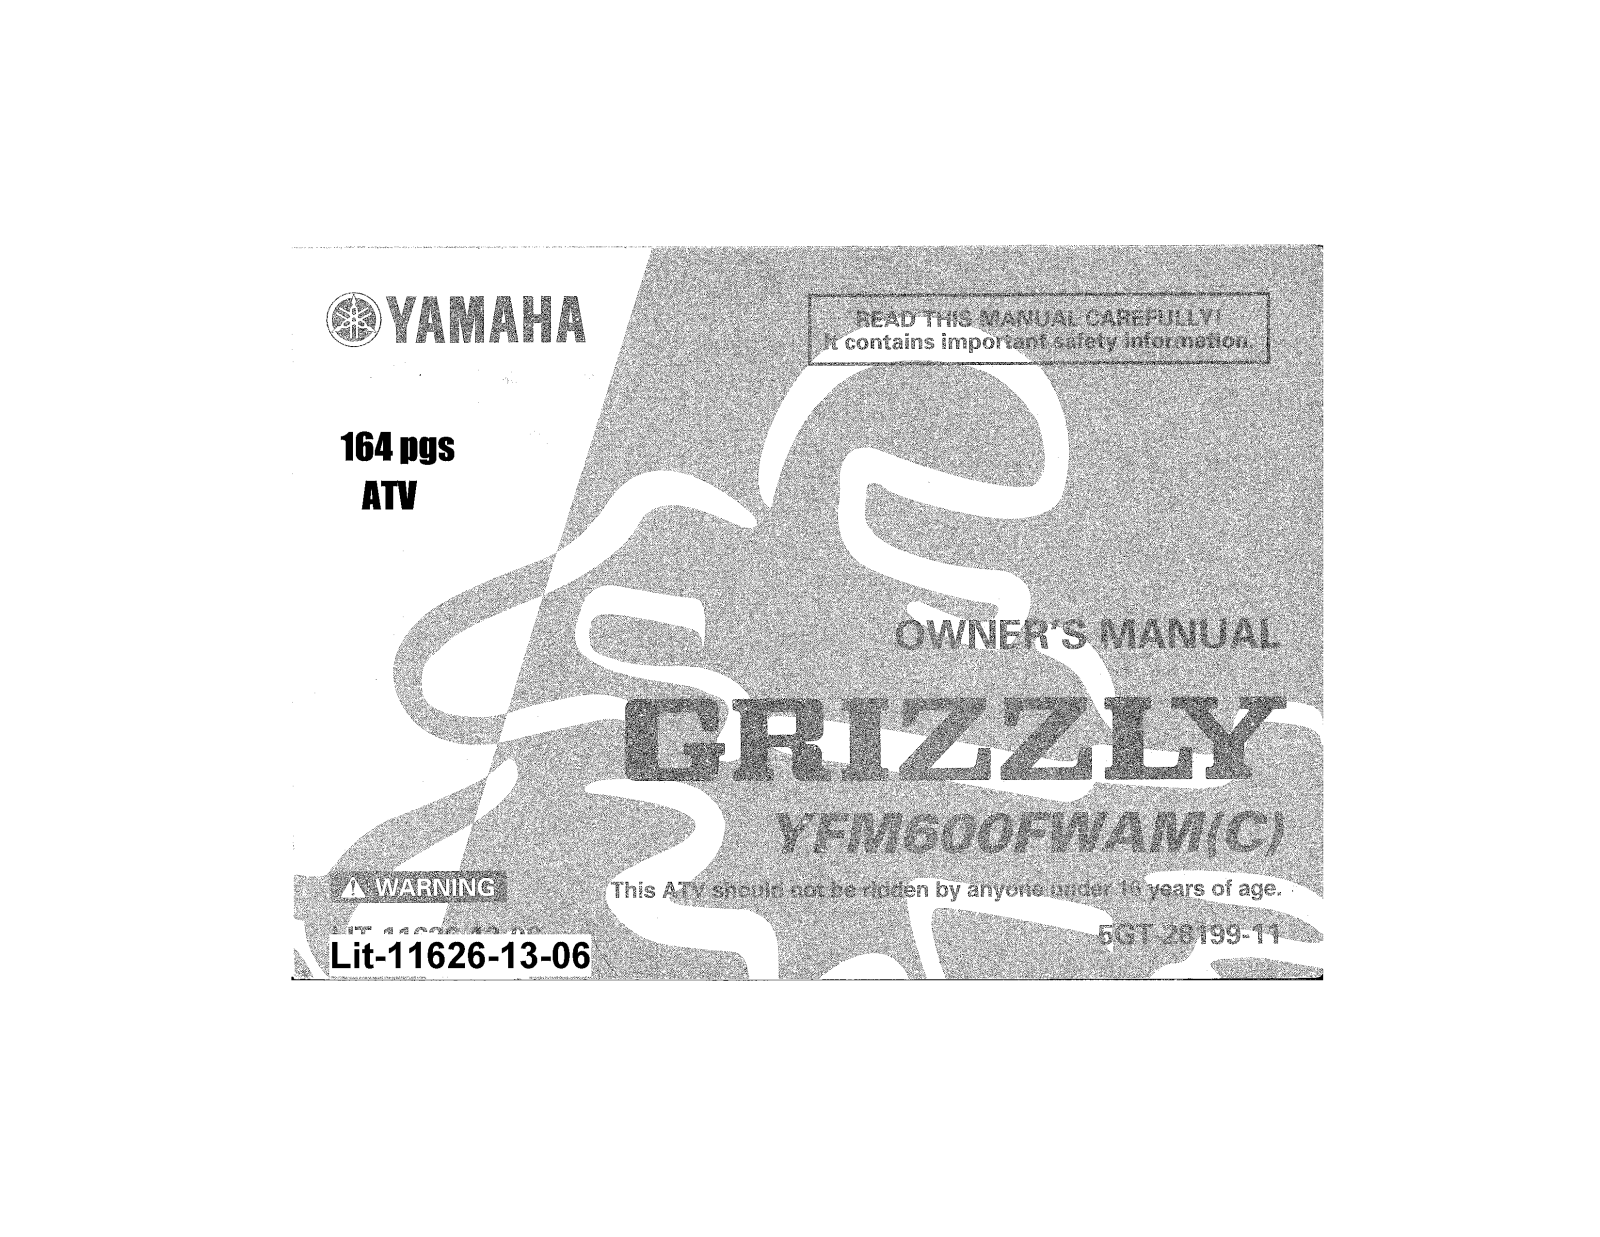 Yamaha GRIZZLY 600 Manual